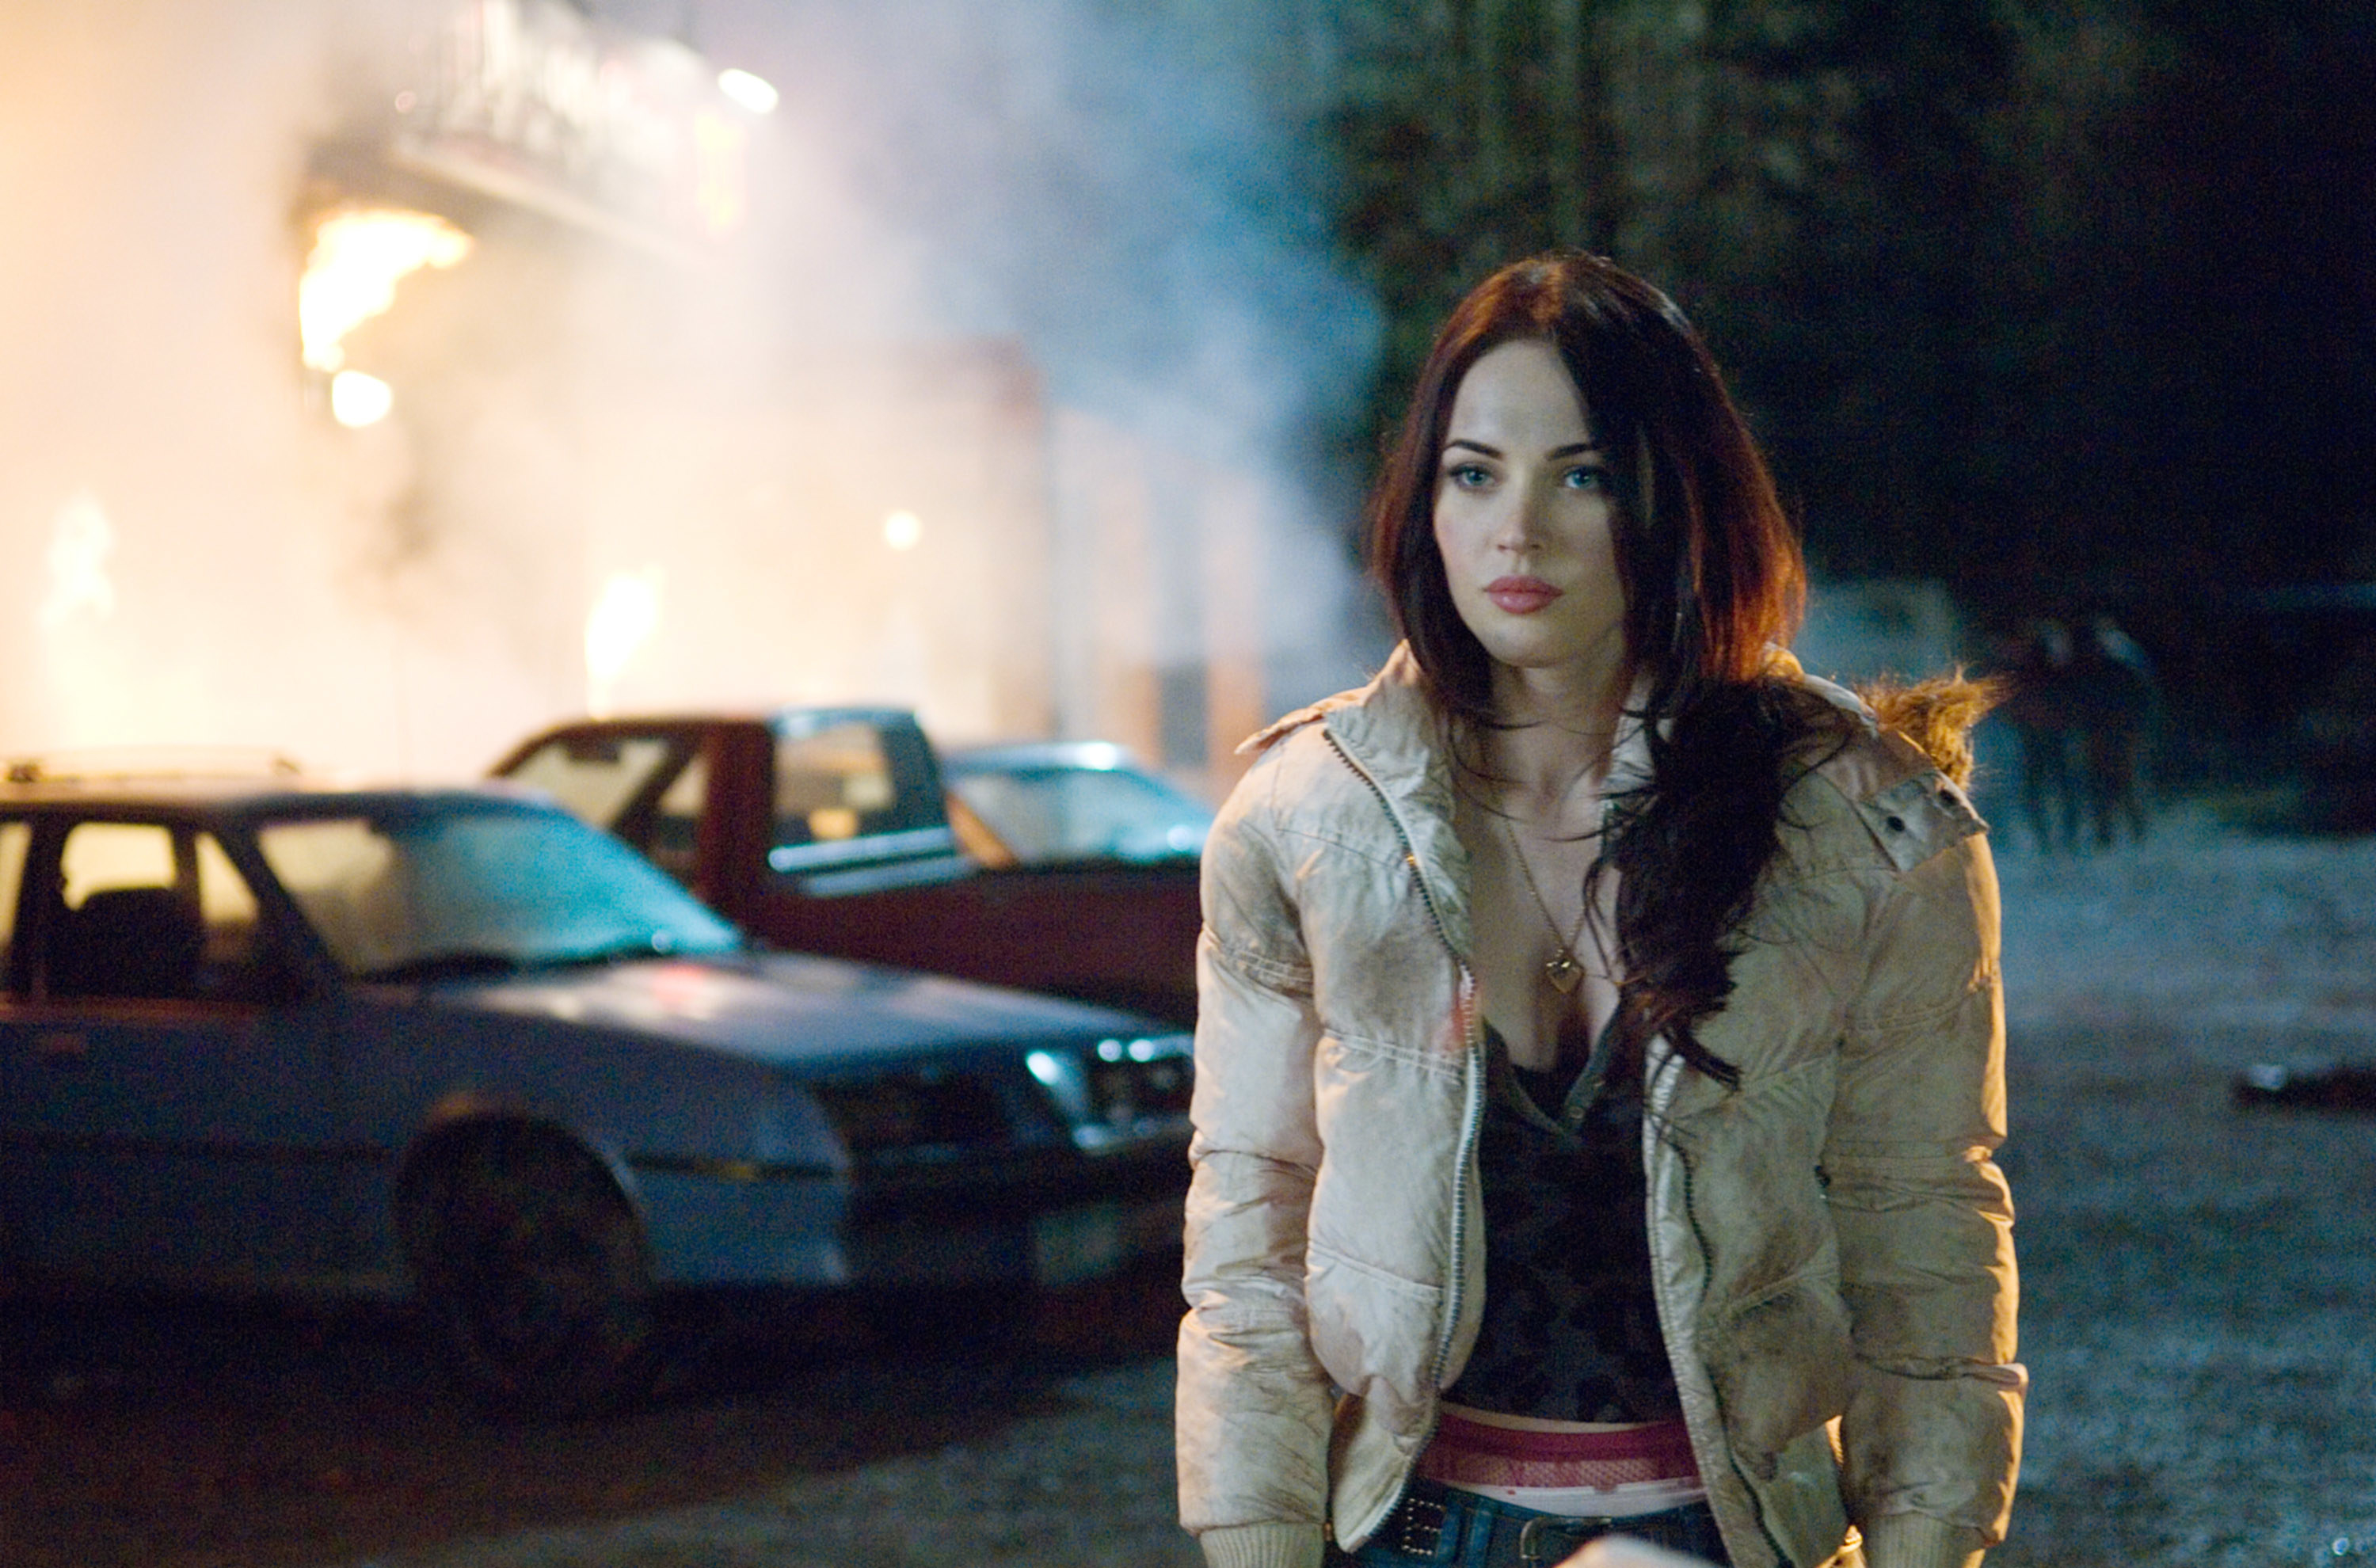 Megan Fox next to some burning cars